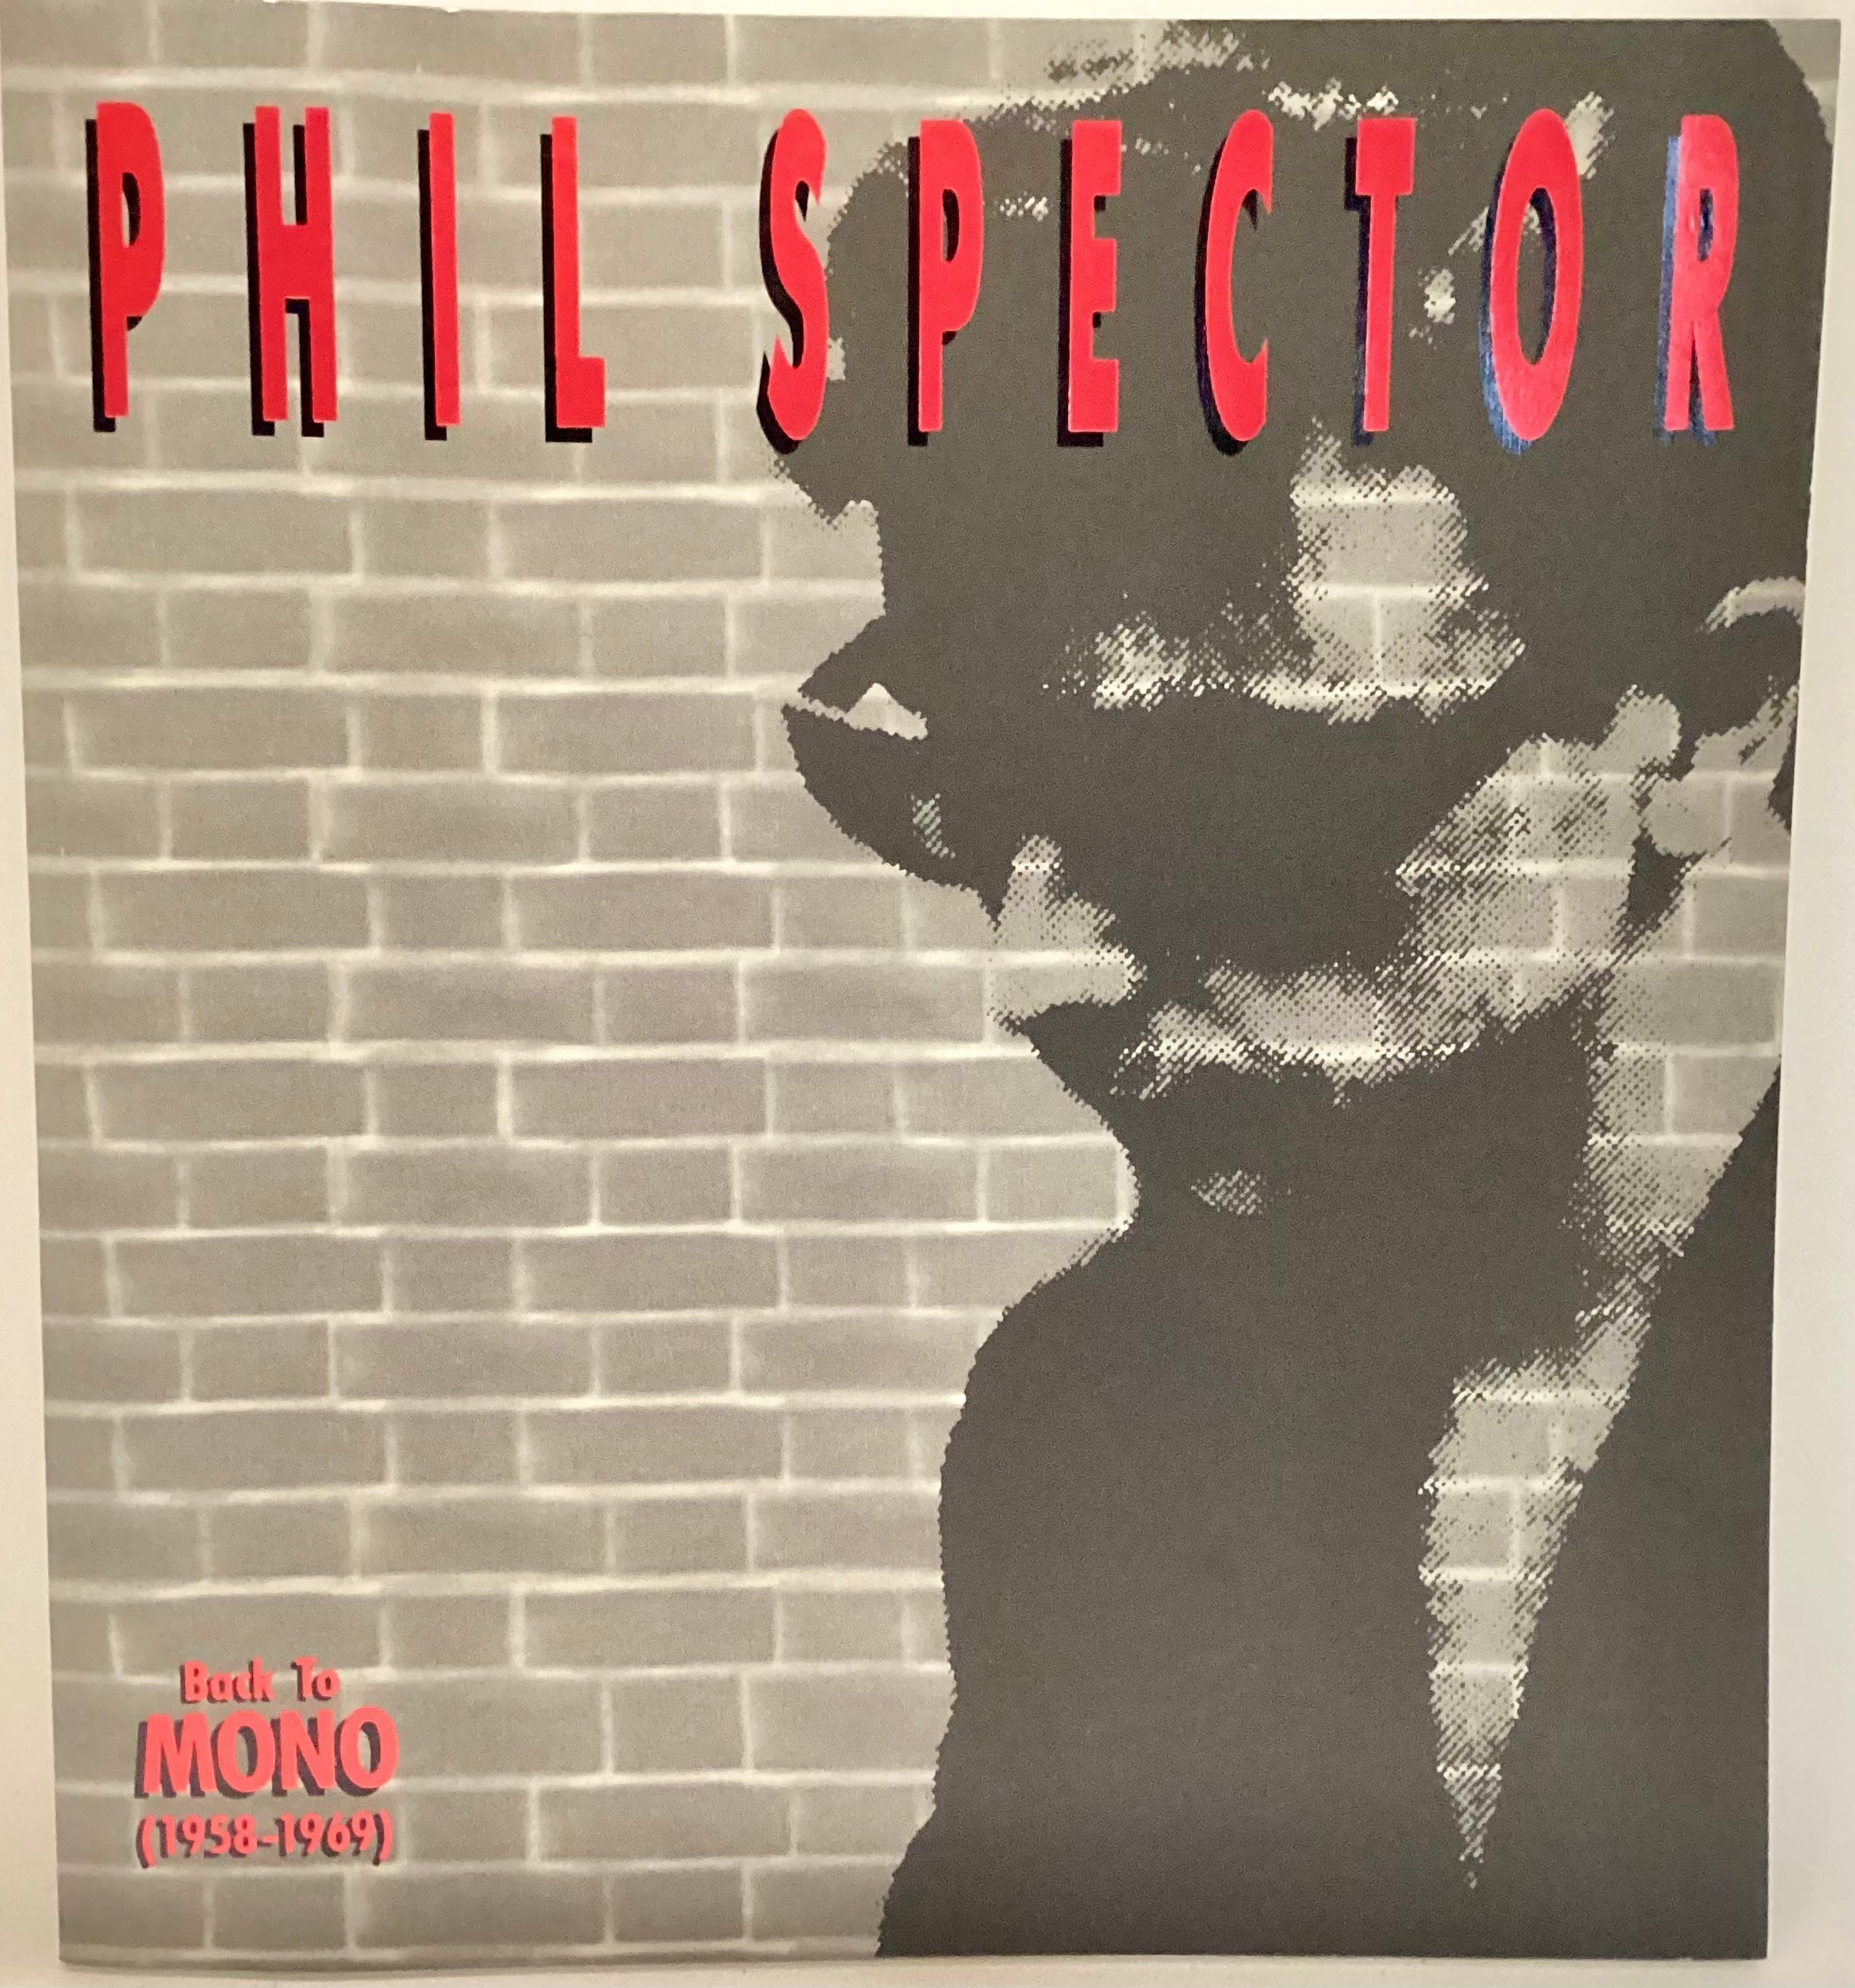 PHIL SPECTOR - BACK TO MONO (1958-1969) 5LP BOX SET. Phil Spector: Back To Mono 1958-1969 is a - Bild 8 aus 8